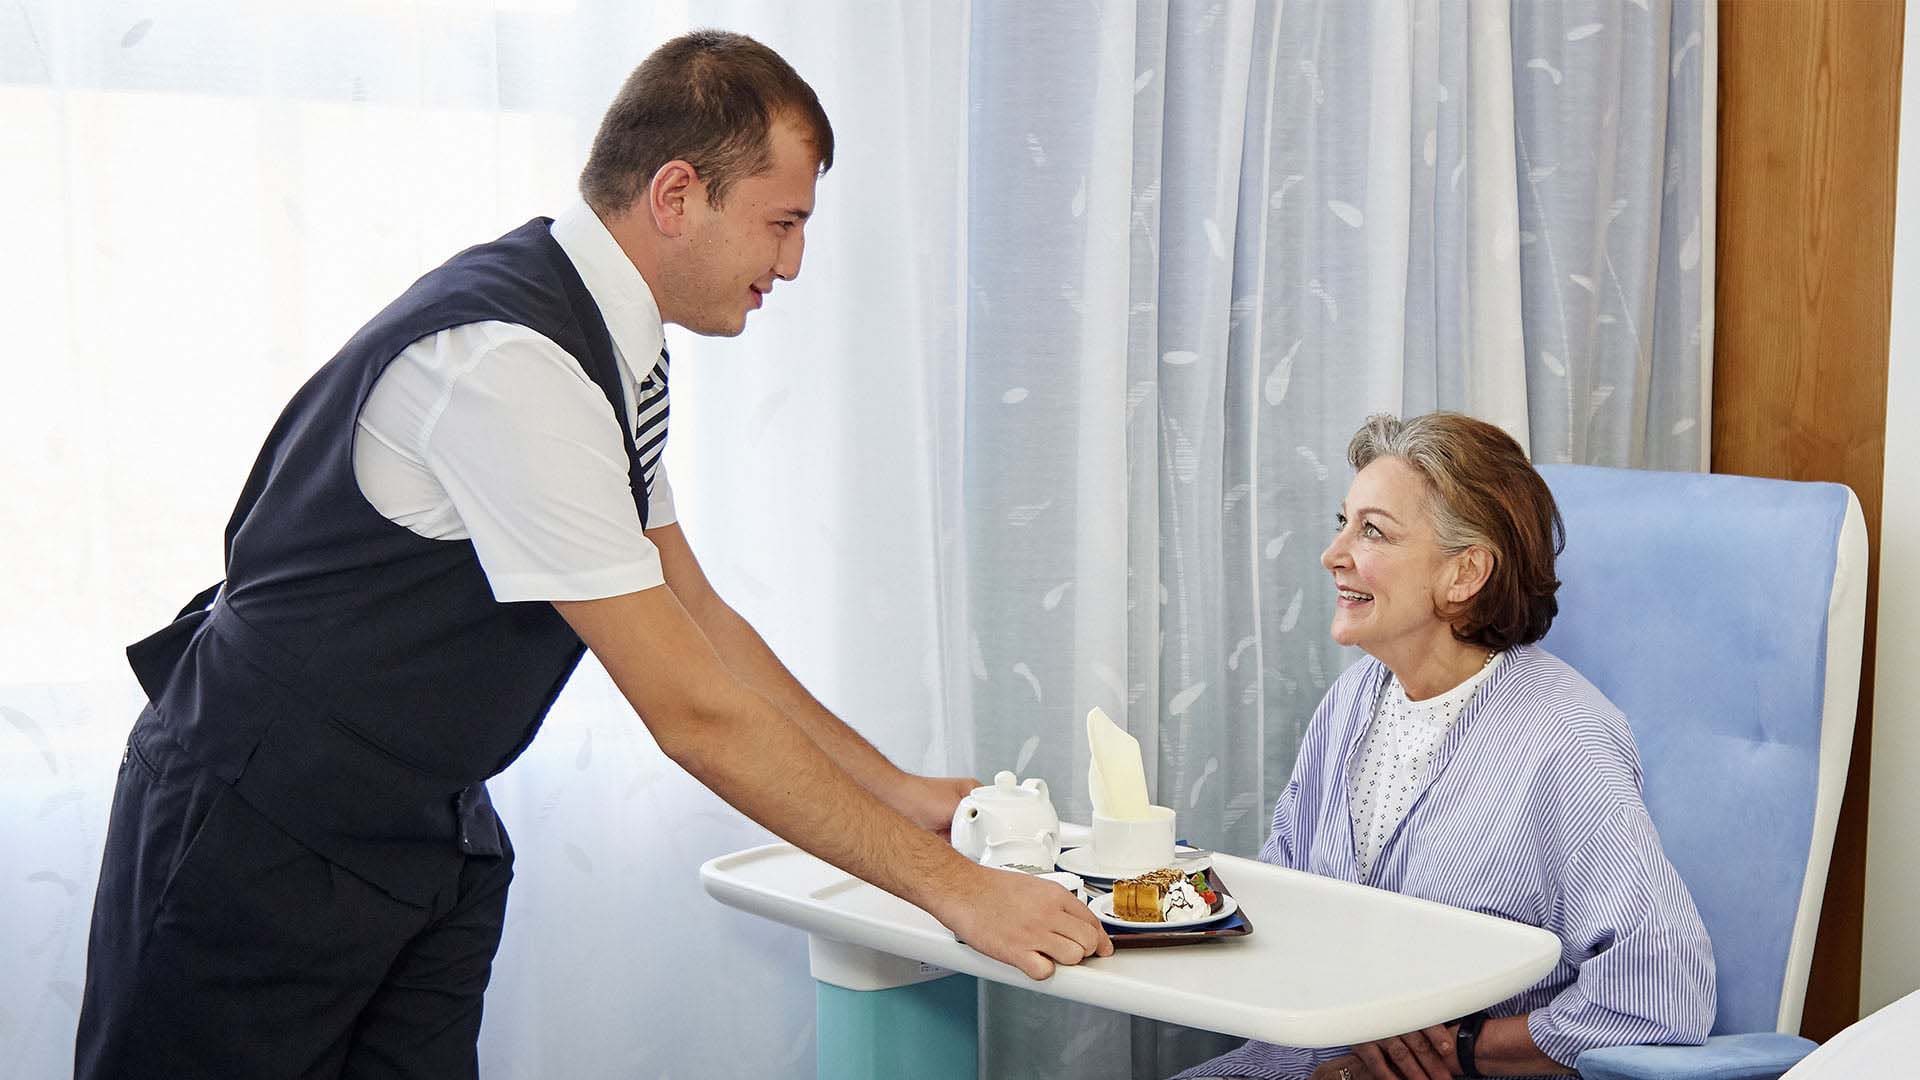 Patient receiving a meal